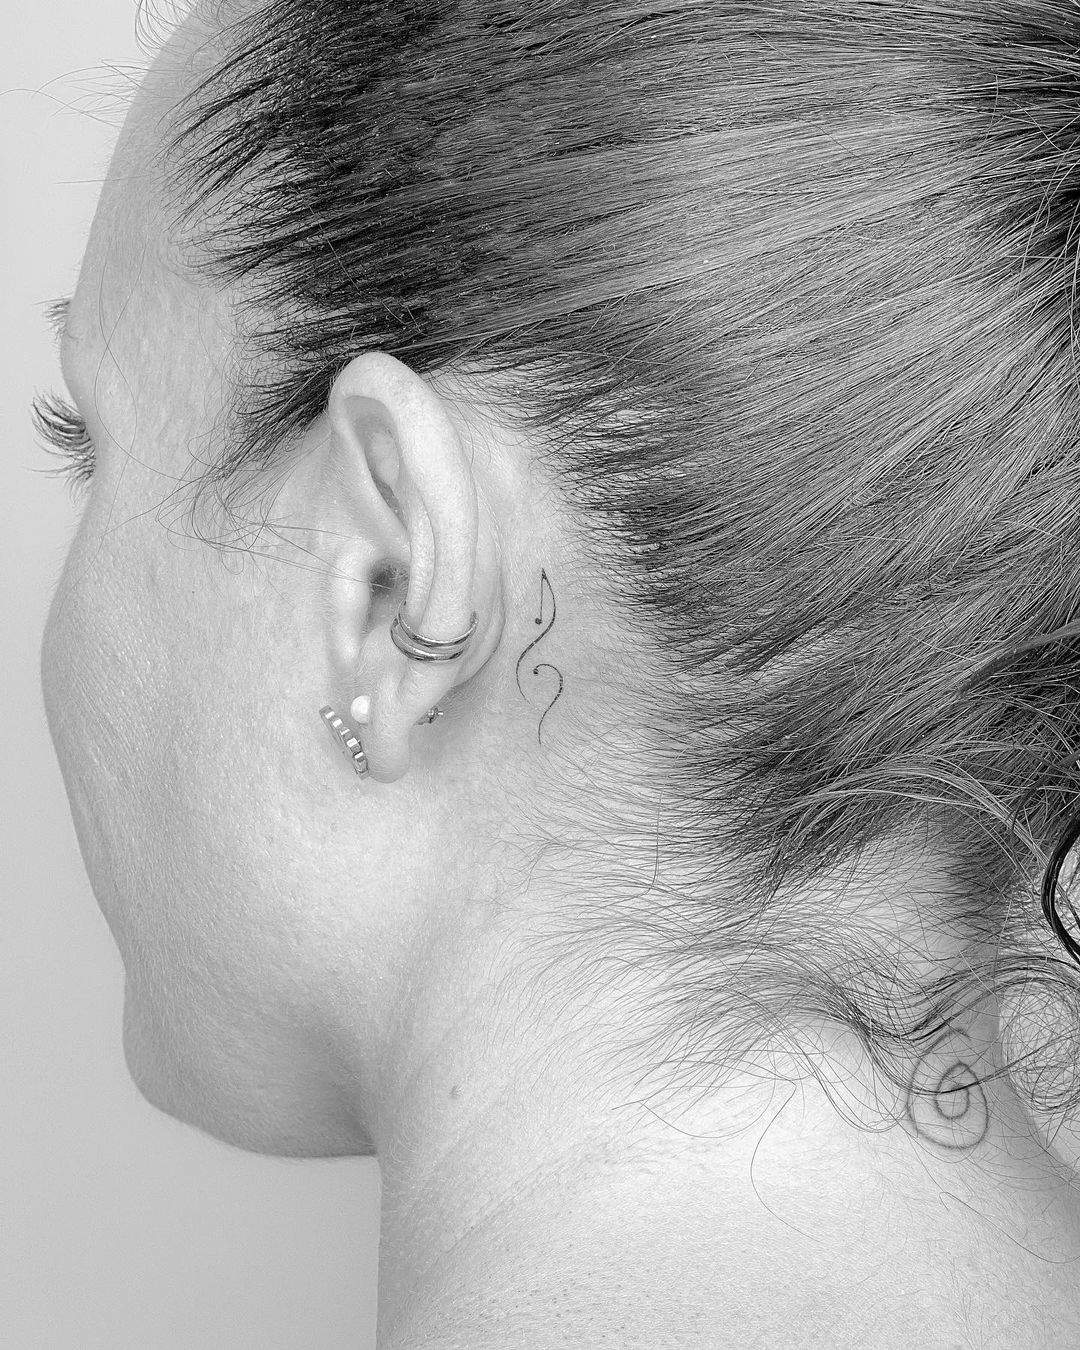 Clave de sol tatuada tras la oreja